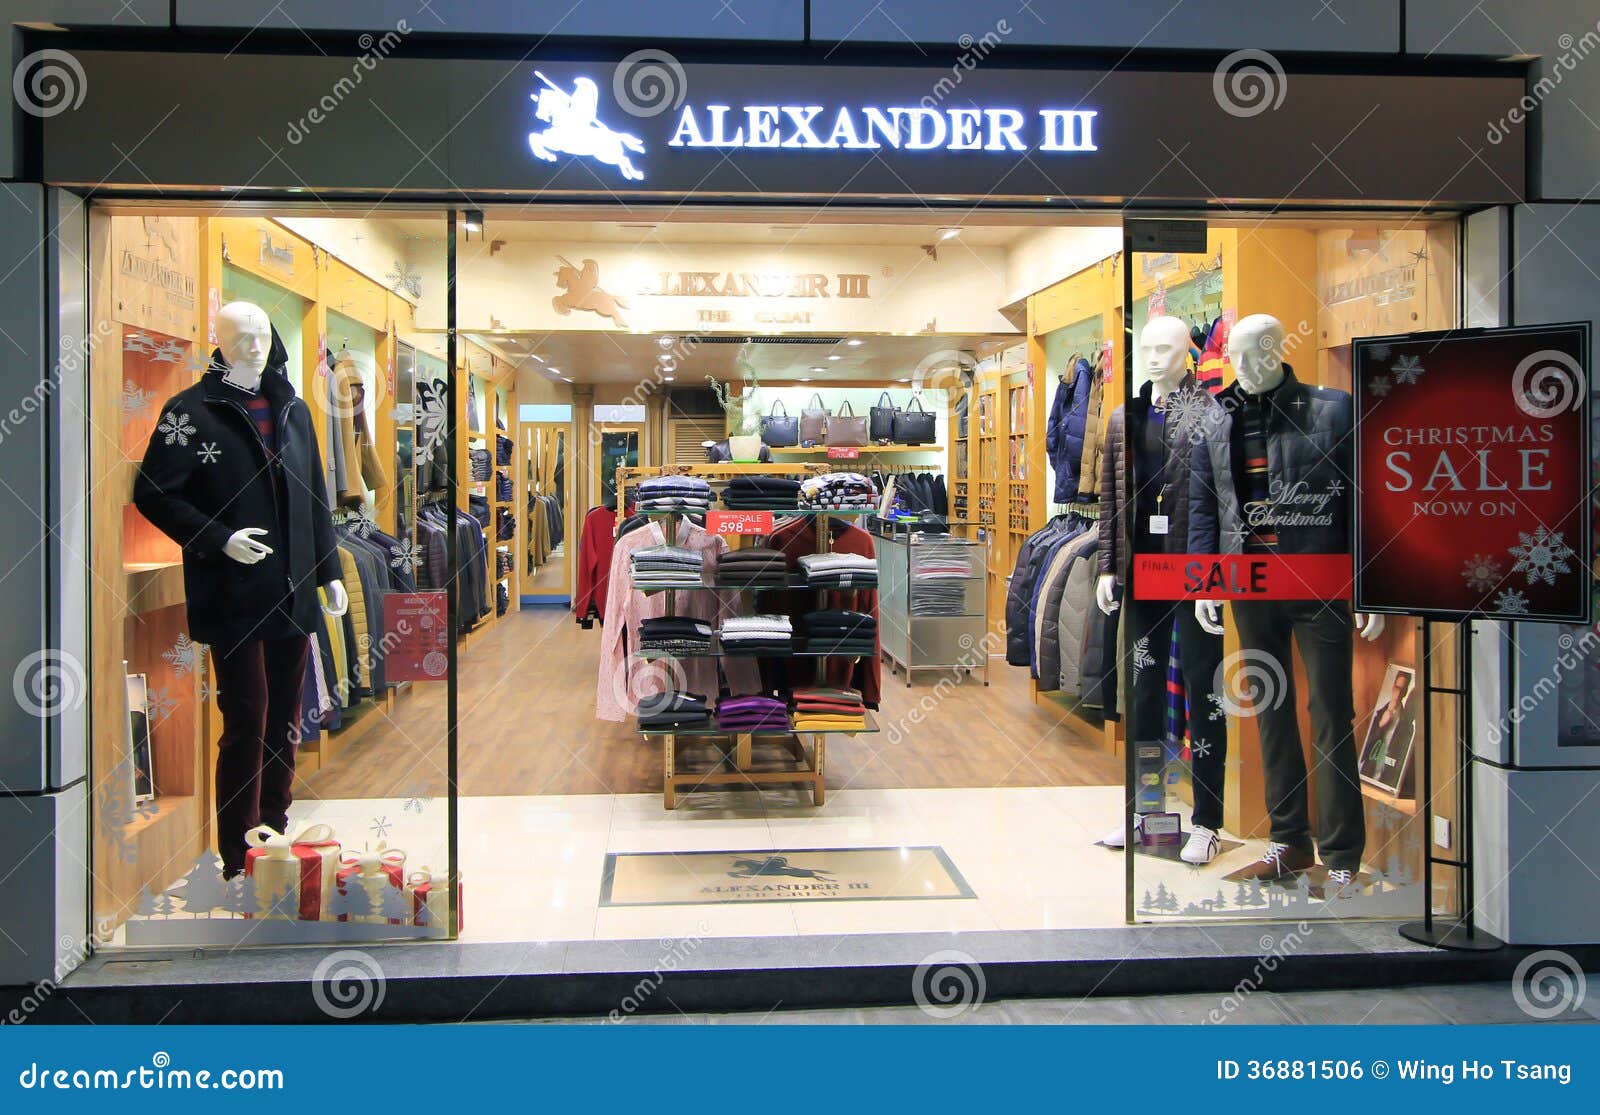 Alexander III Shop in Hong Kong Editorial Photo - Image of clothing ...